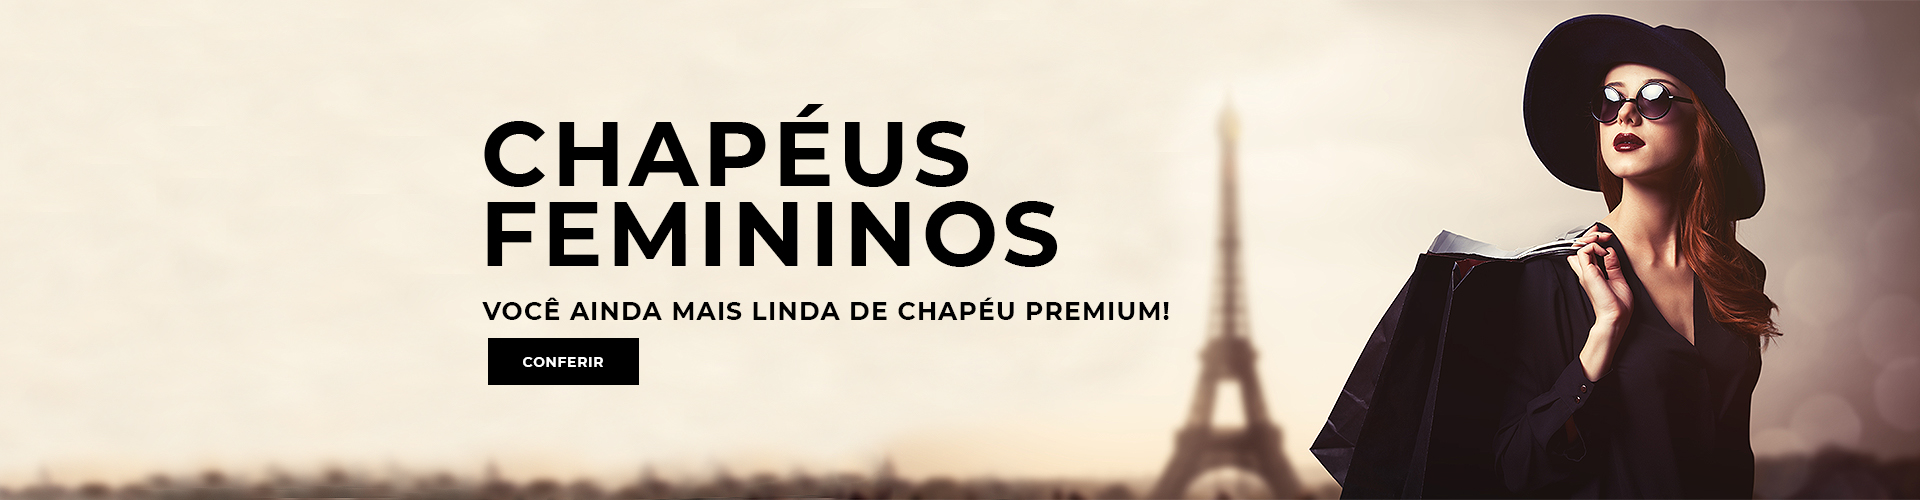 Chapéus Femininos www.chapeupremium.com.br